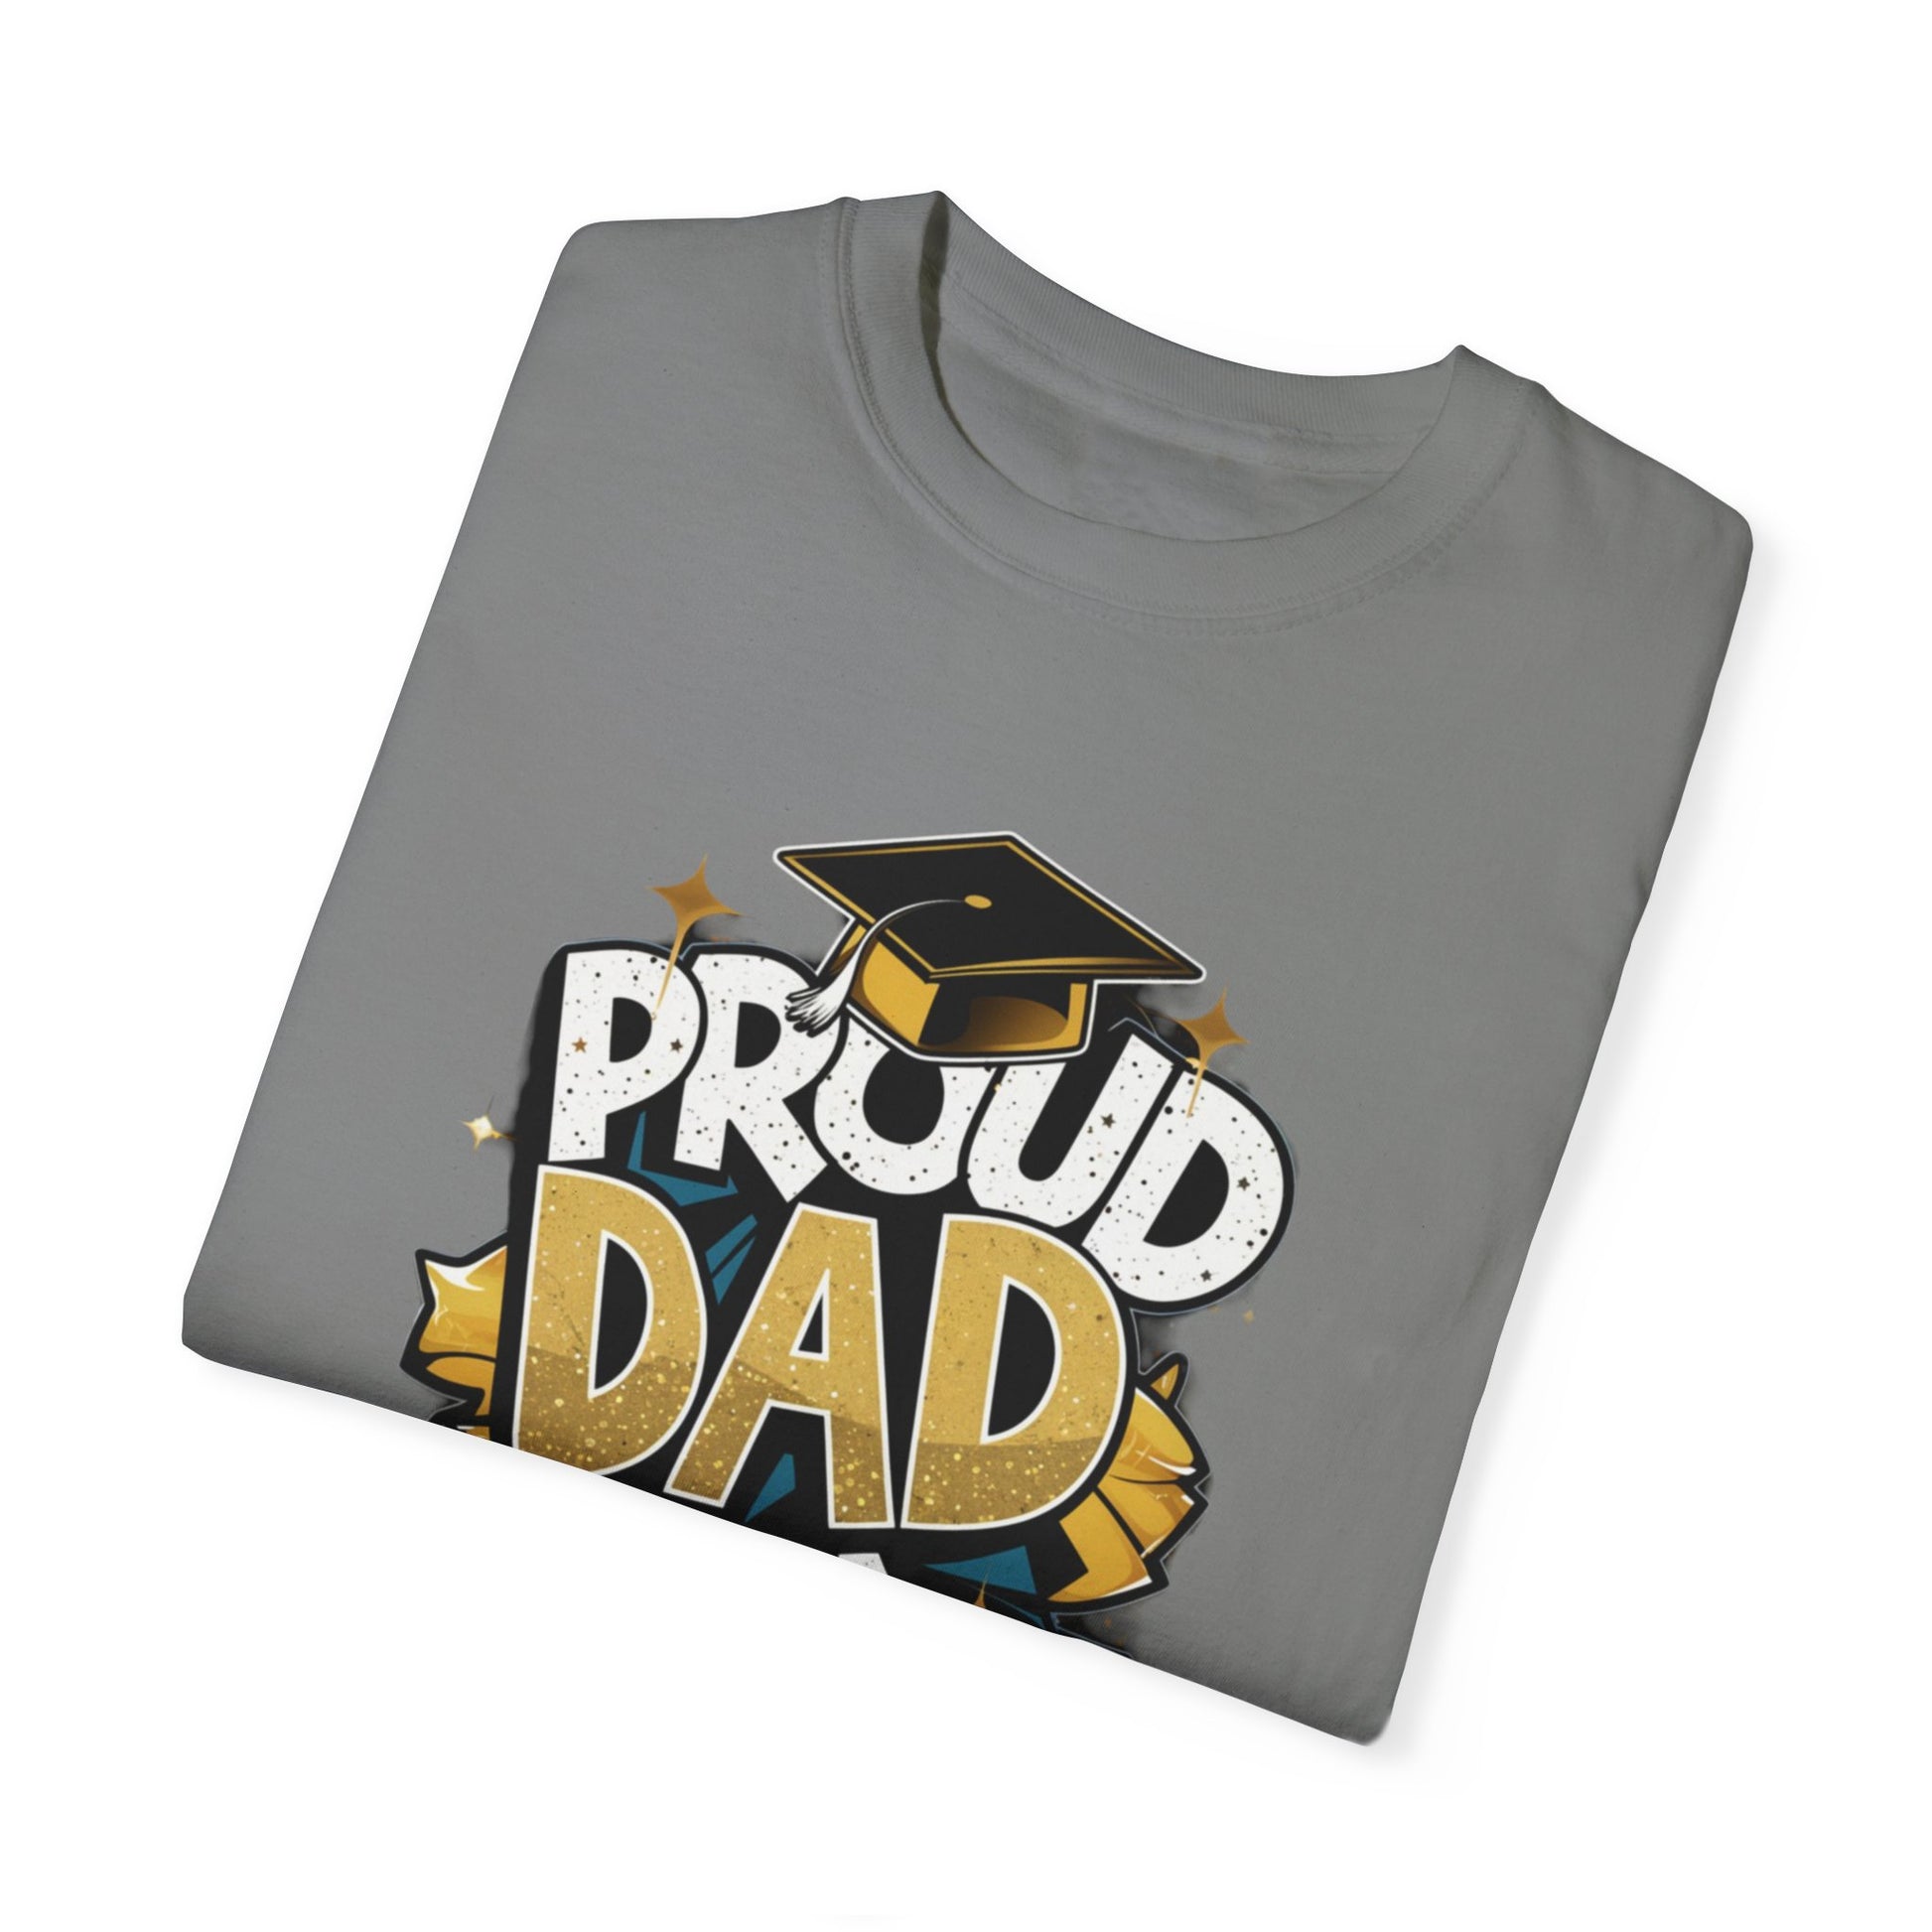 Proud Dad of a 2024 Graduate Unisex Garment-dyed T-shirt Cotton Funny Humorous Graphic Soft Premium Unisex Men Women Grey T-shirt Birthday Gift-41